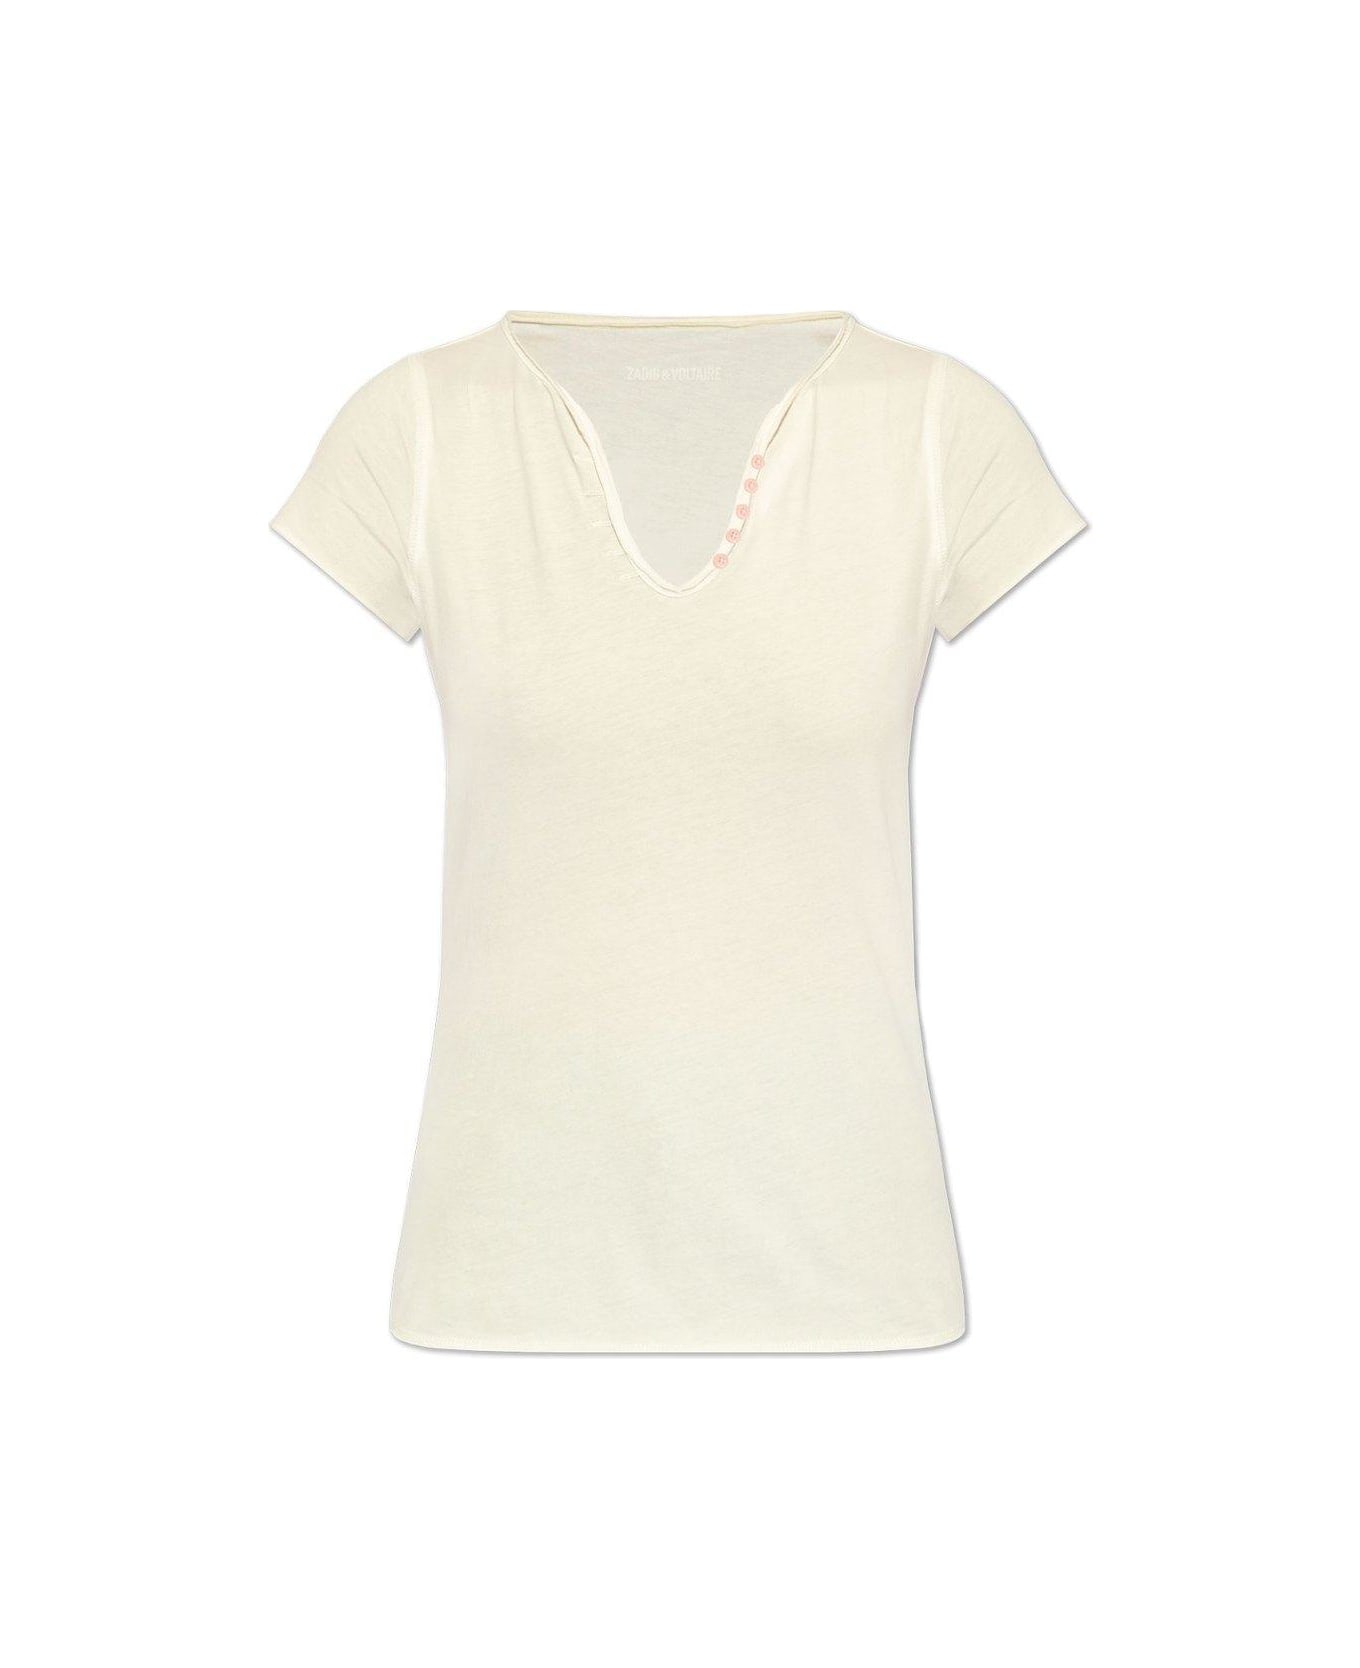 Zadig & Voltaire Logo Printed U-neck T-shirt - WHITE